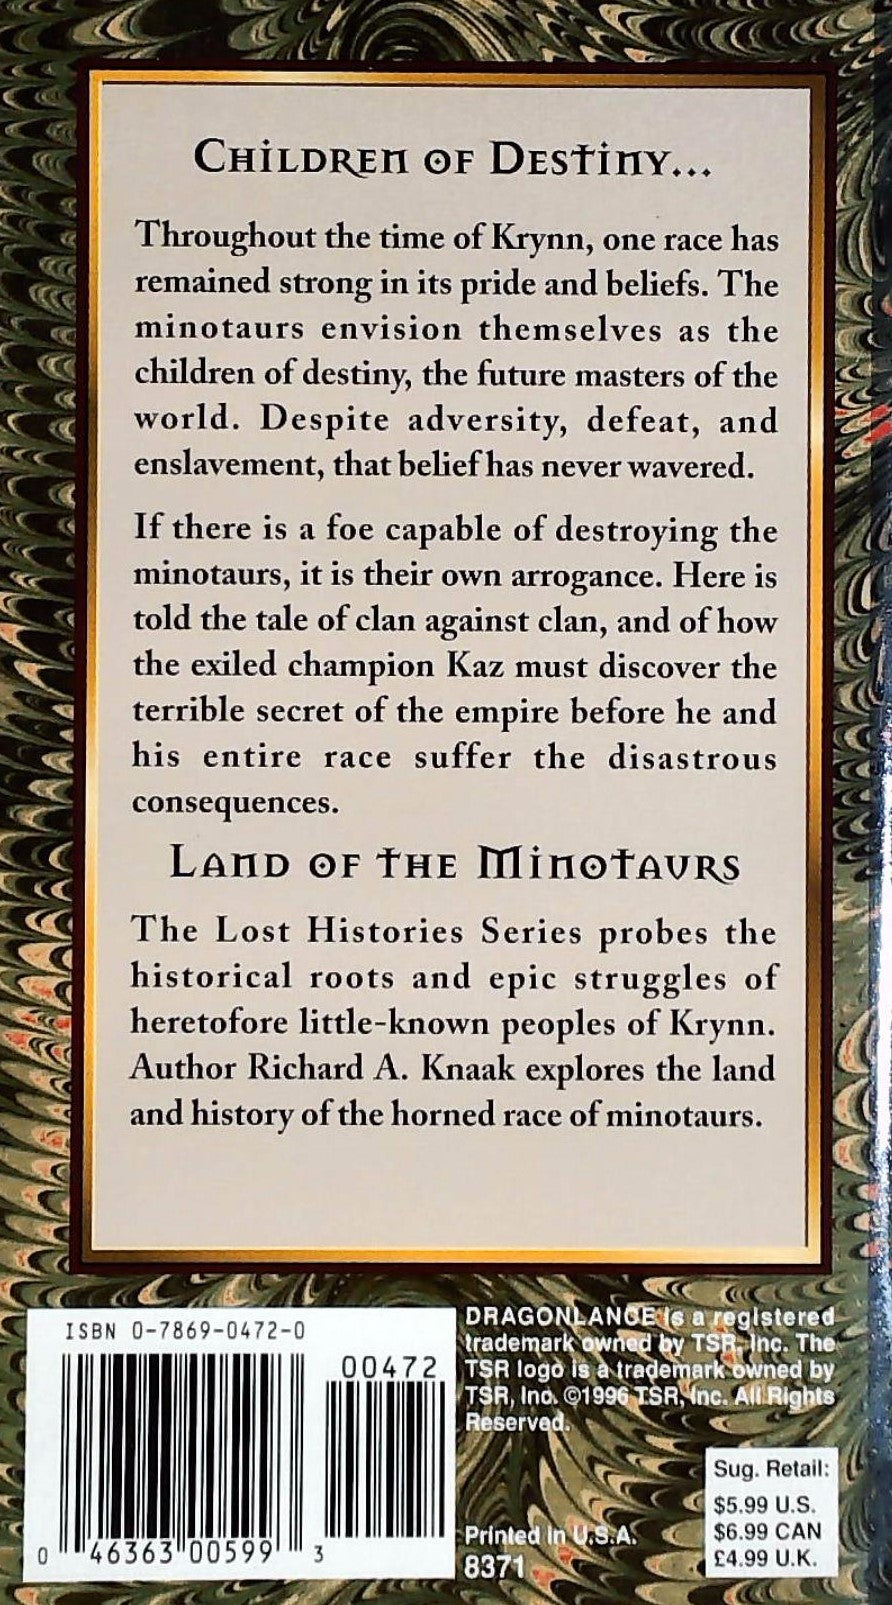 DragonLance : The Lost Histories # 4 : Land of the Minotaurs (Richard A. Knaak)